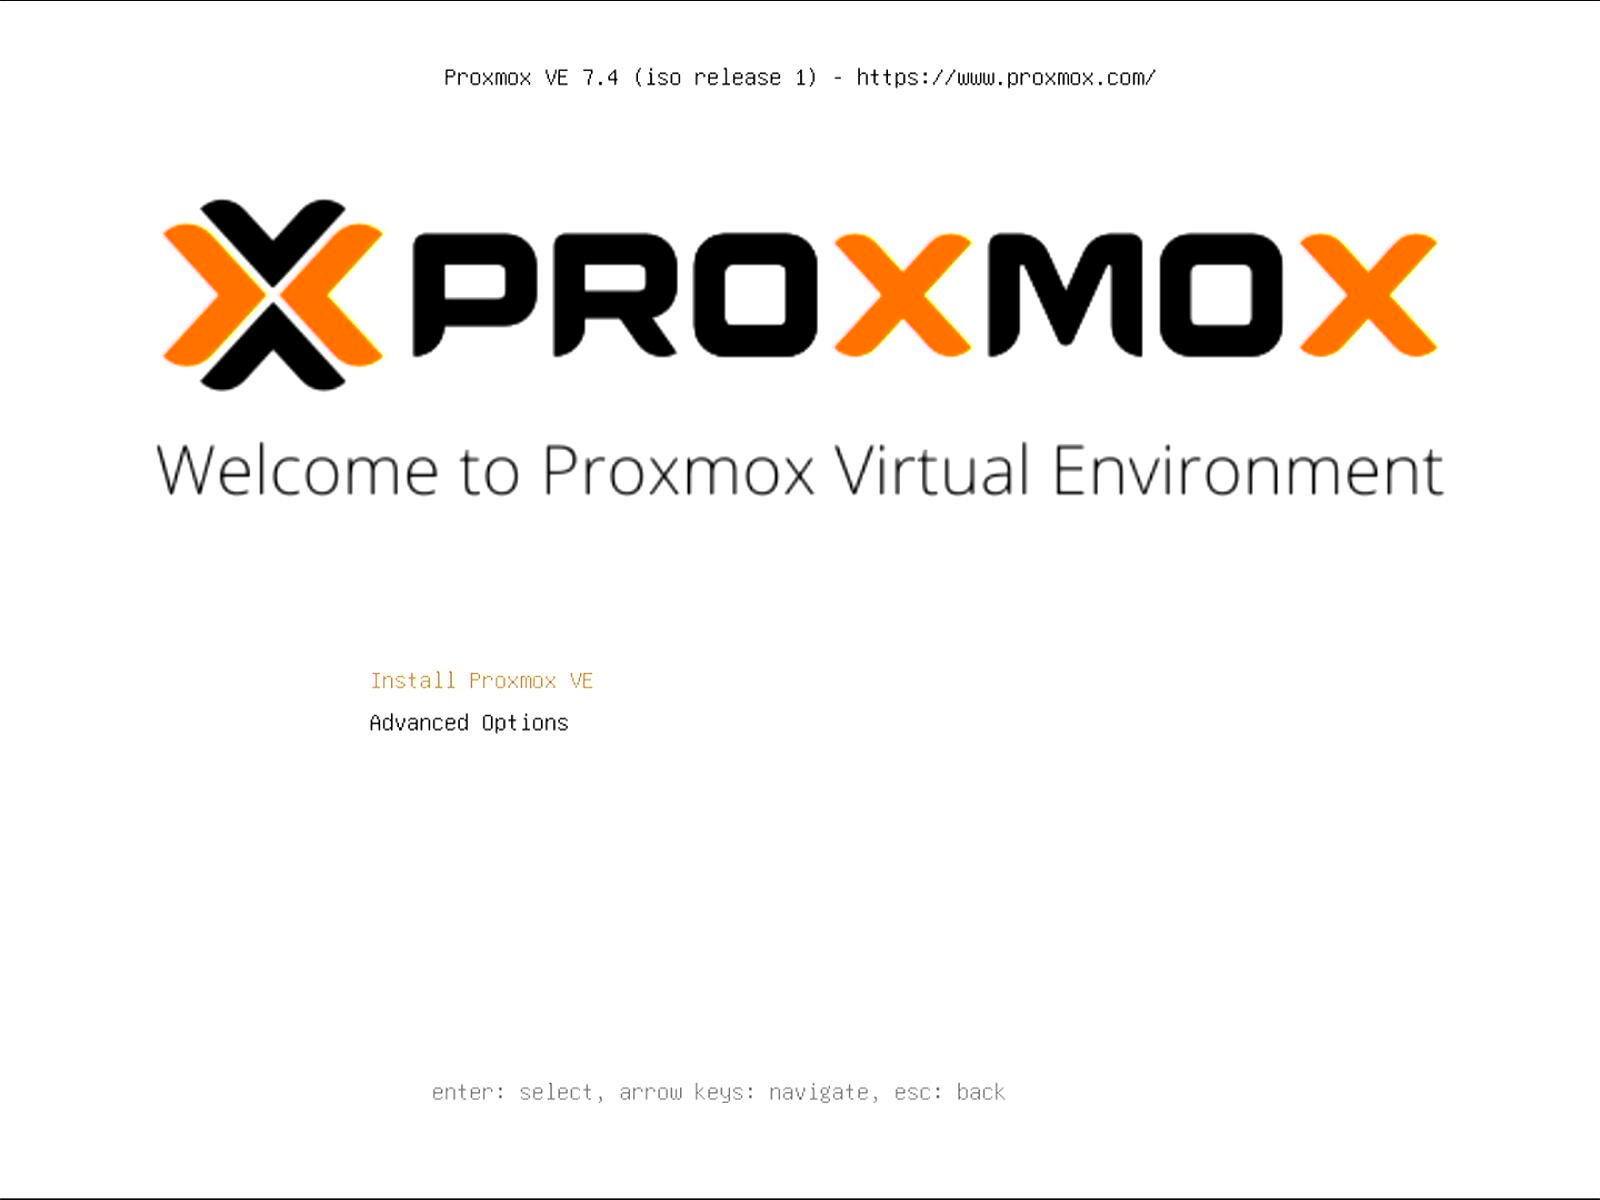 proxmox welcome